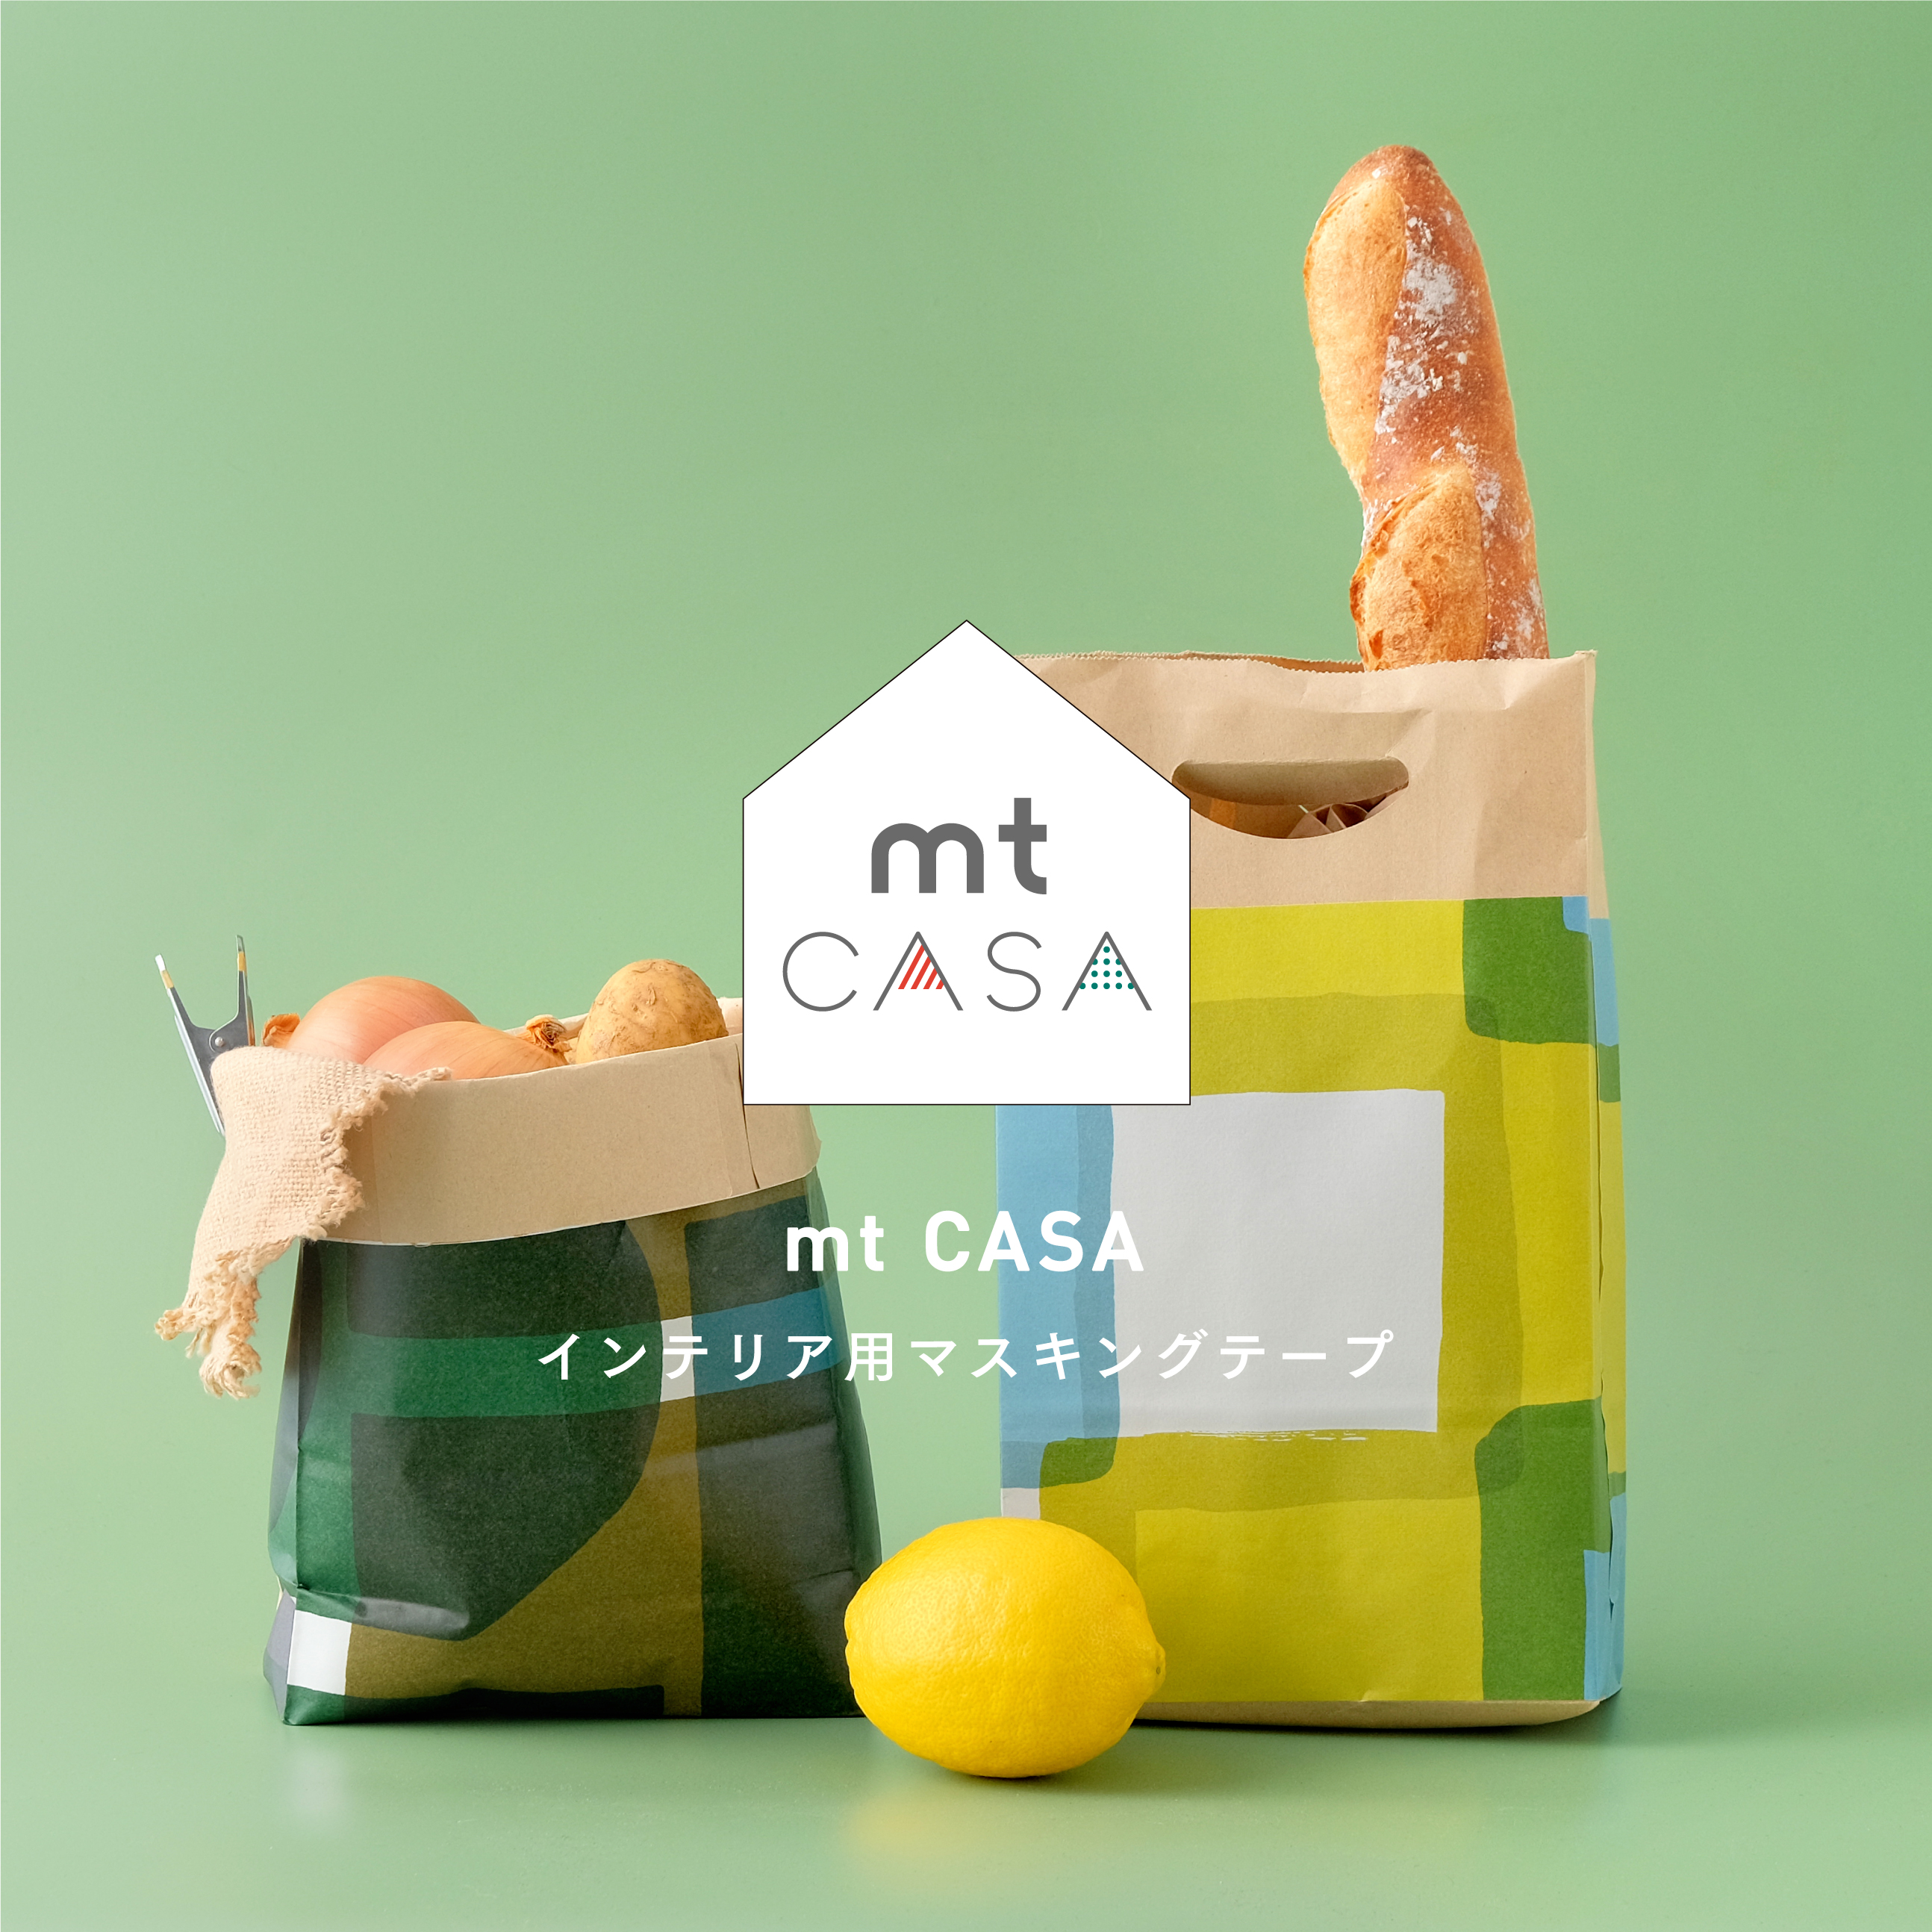 mt CASA | マスキングテープ「mt」- masking tape -